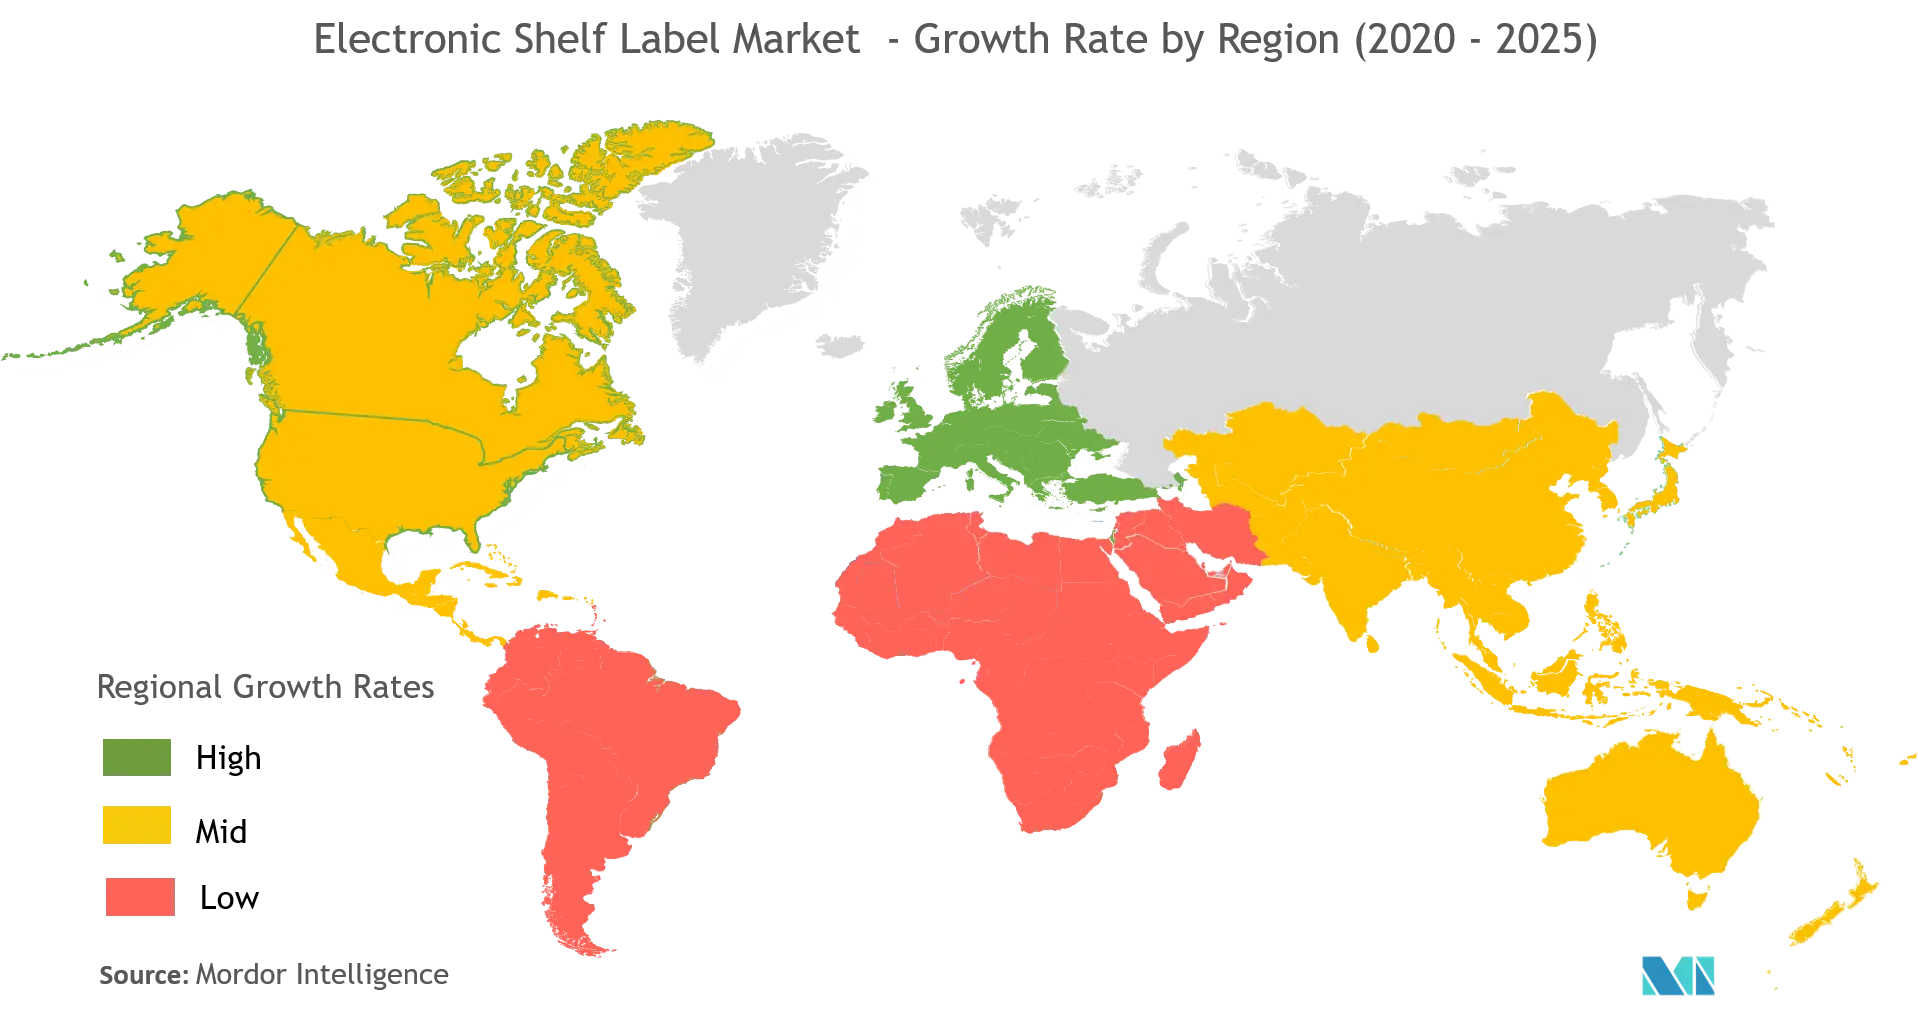 Electronic Shelf Label Market Growth By Region